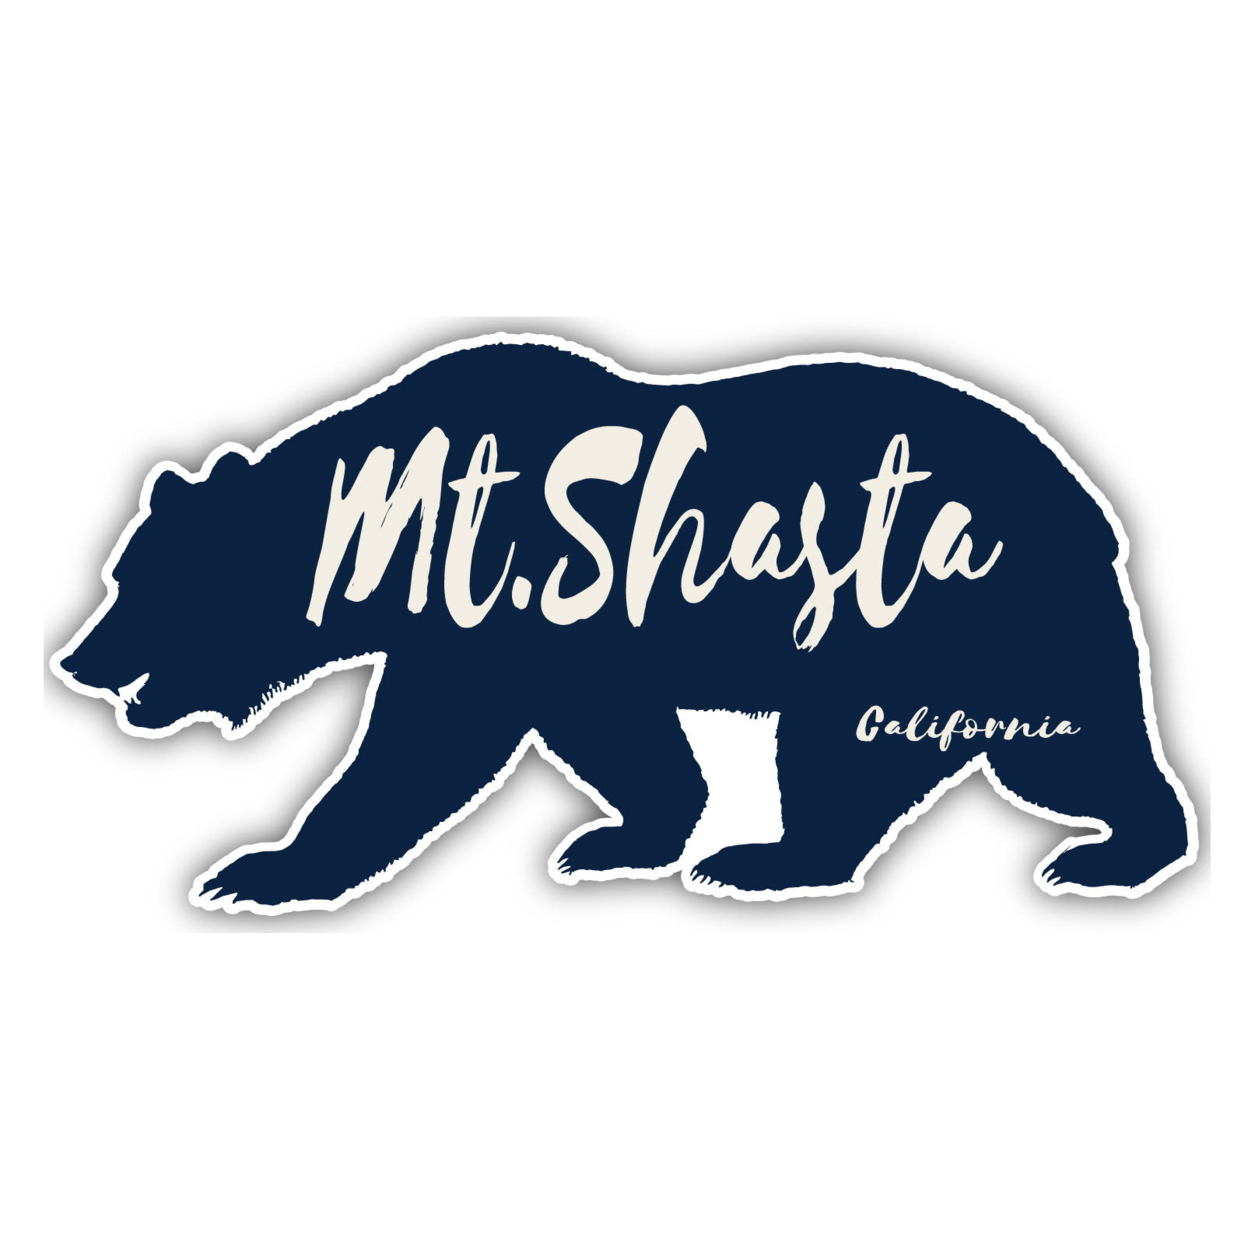 Mt.Shasta California Souvenir Decorative Stickers (Choose Theme And Size) - Single Unit, 4-Inch, Adventures Awaits